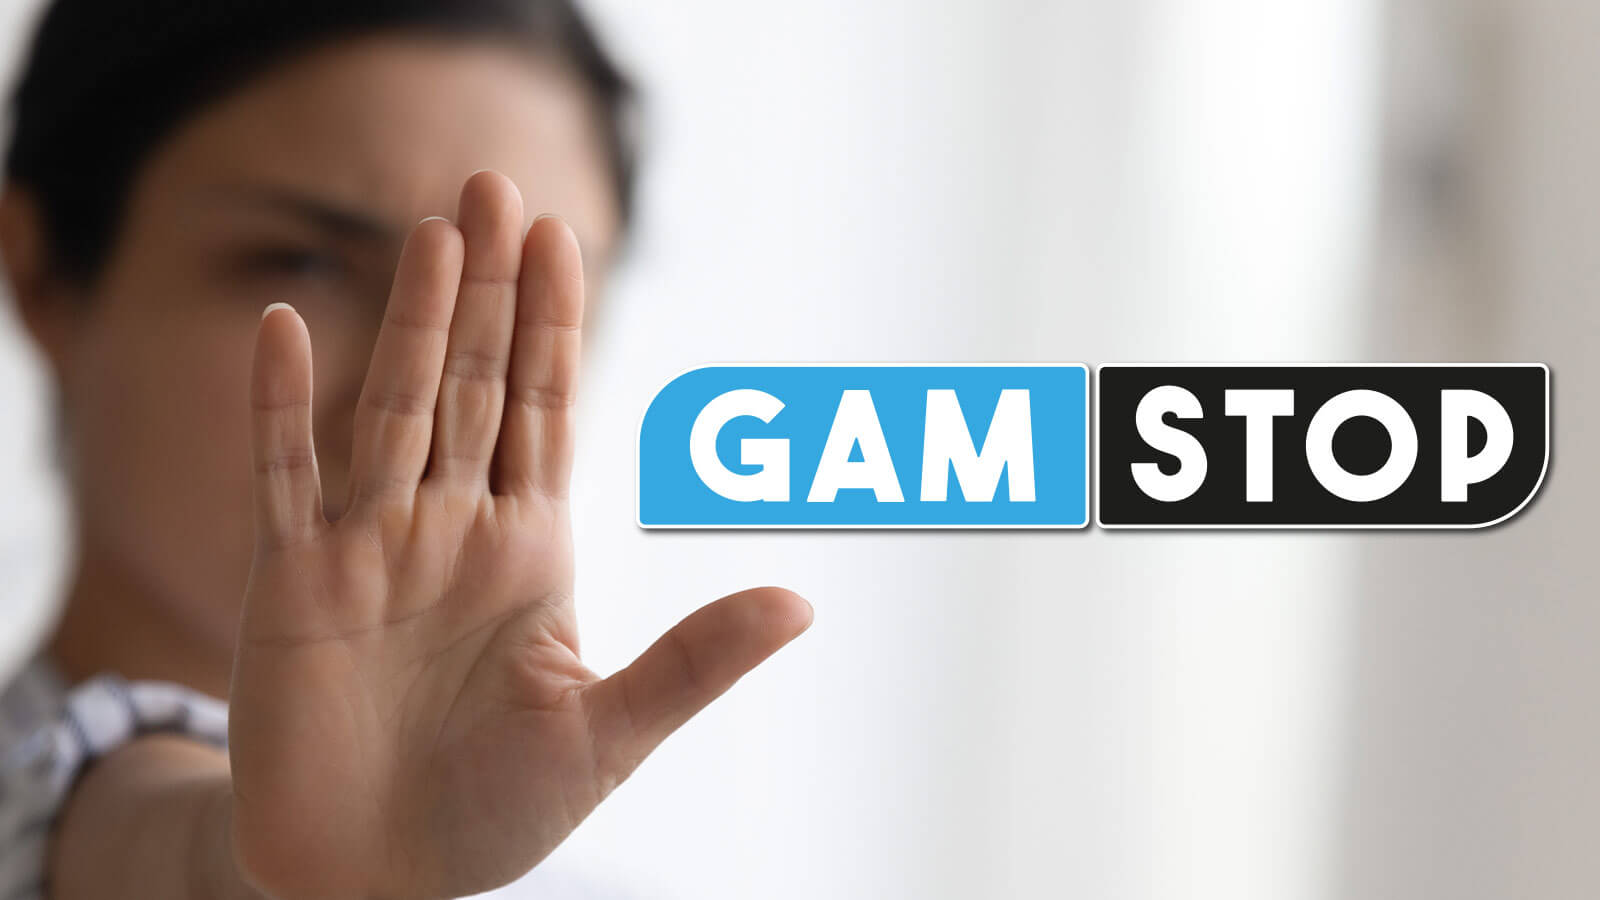 Gamstop gambling self-exclusion guide